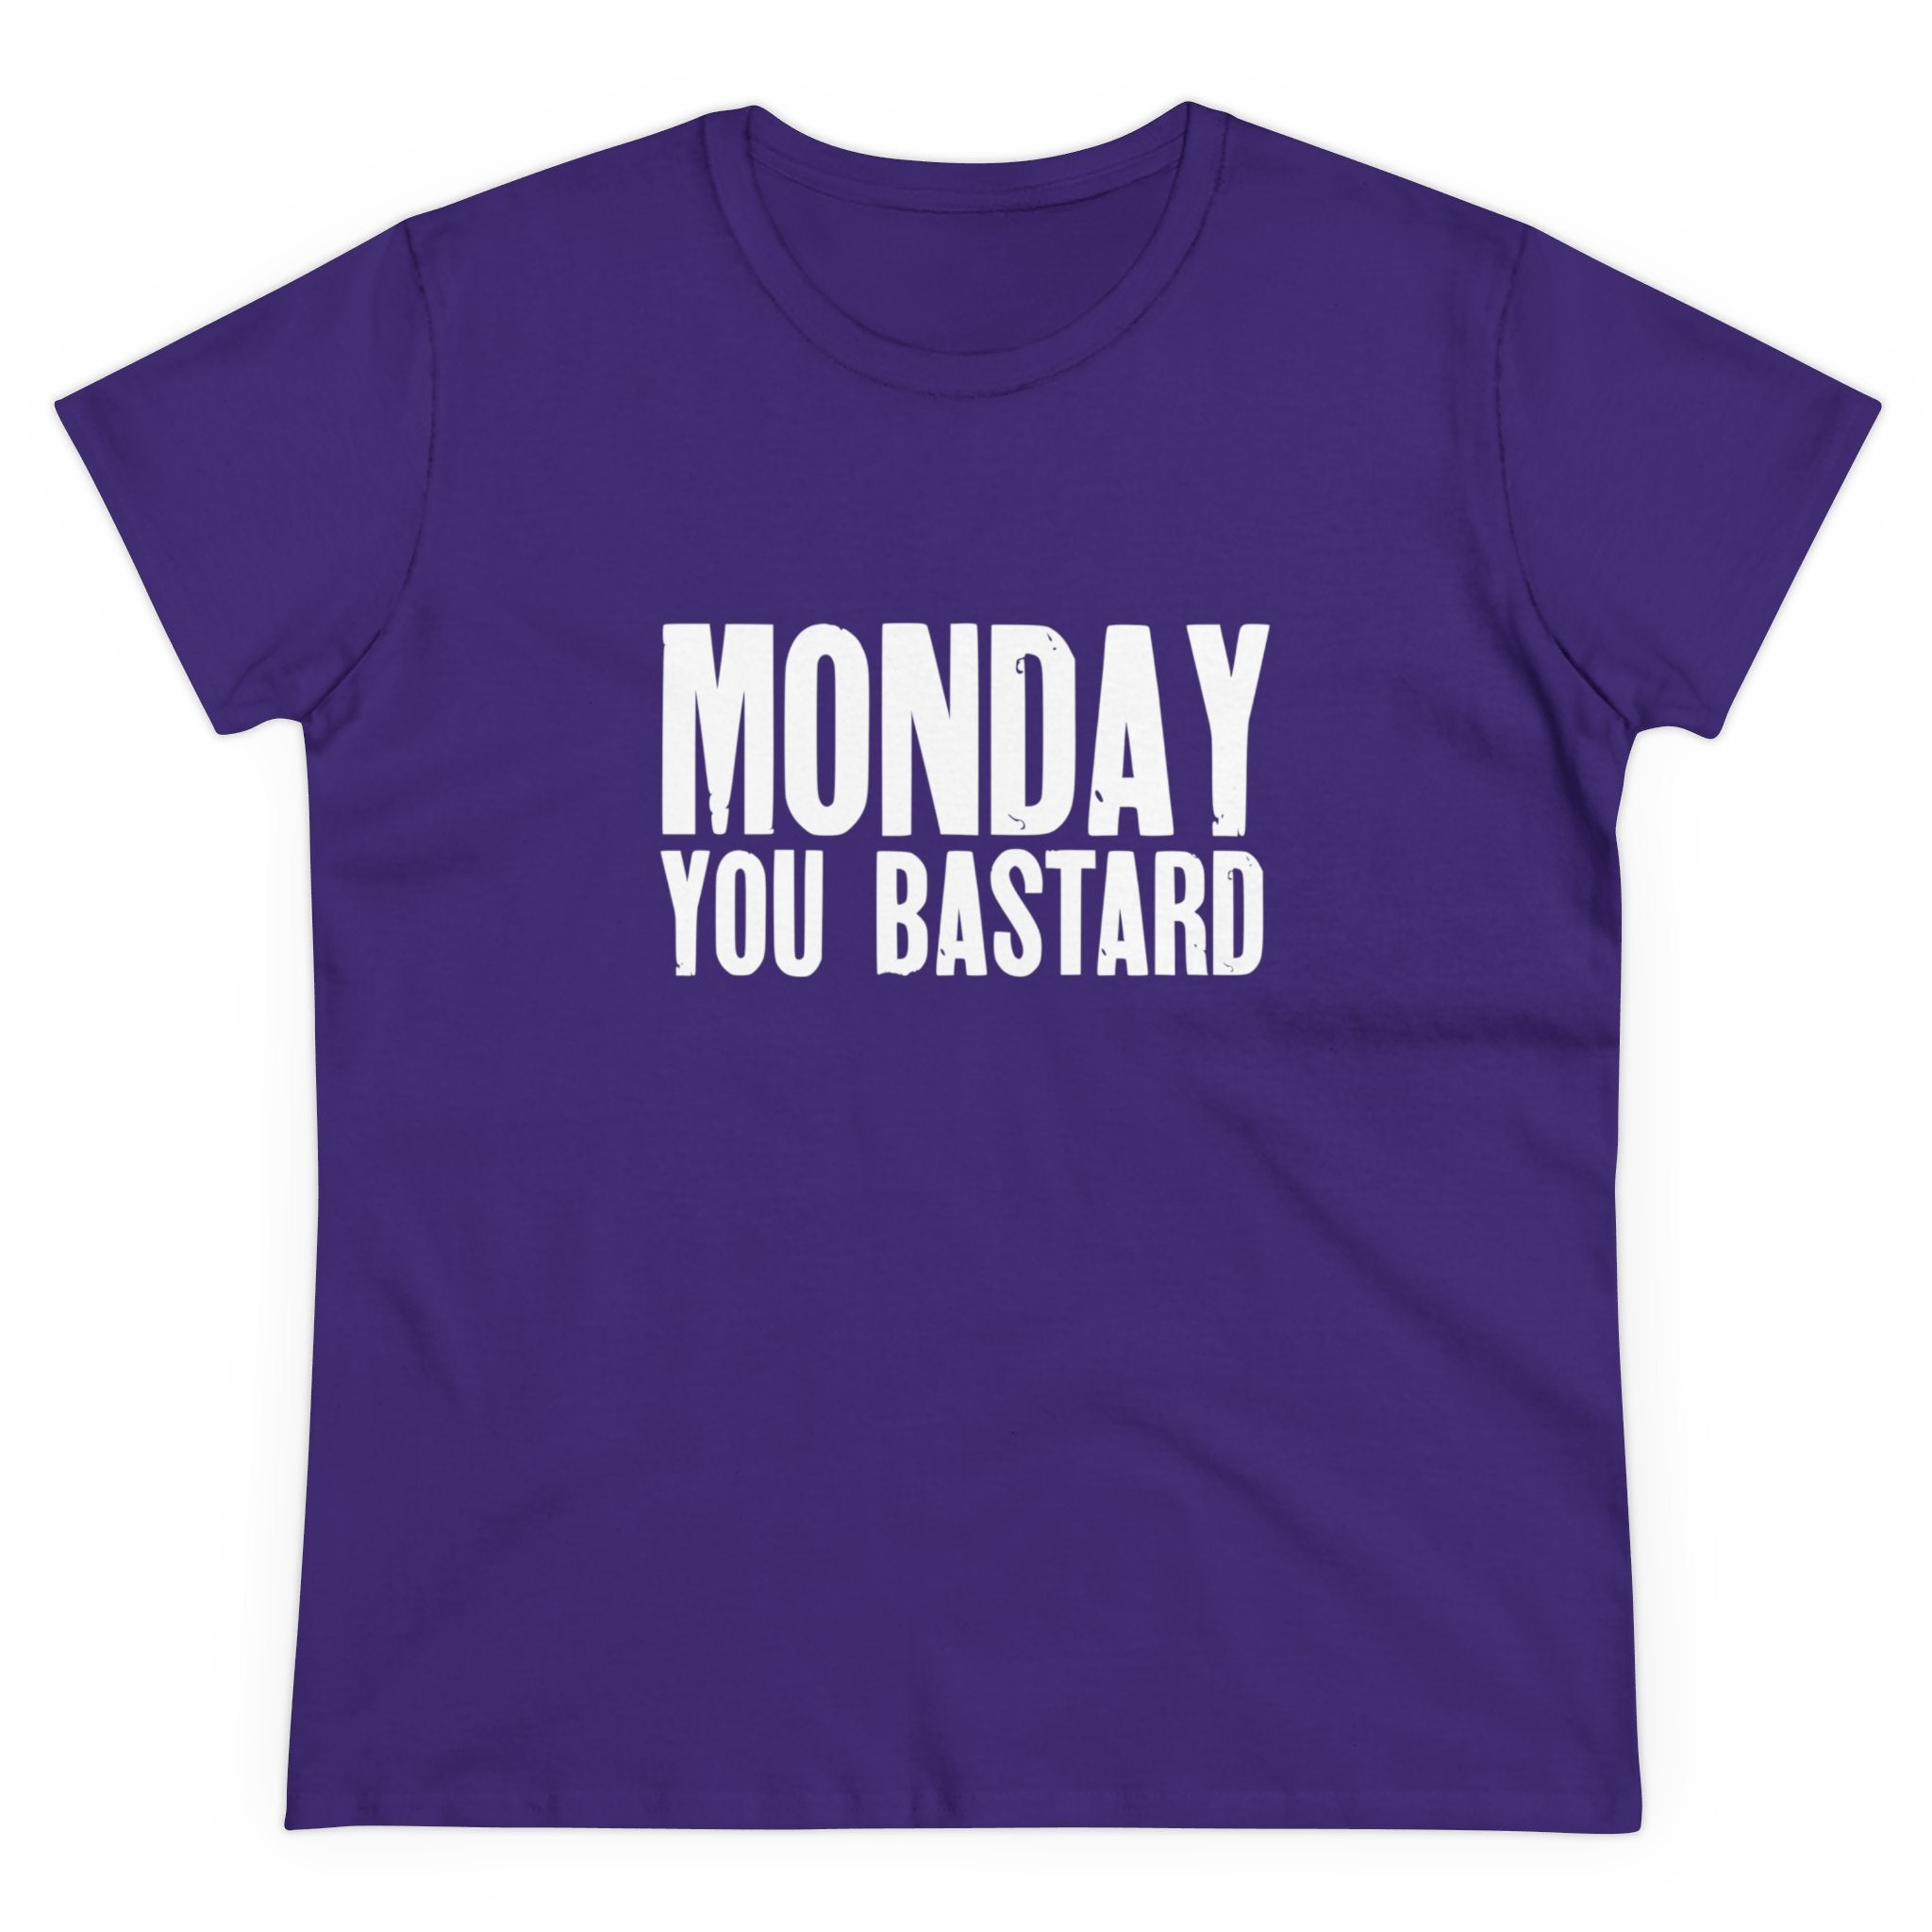 Monday You Bastard - Women's Tee